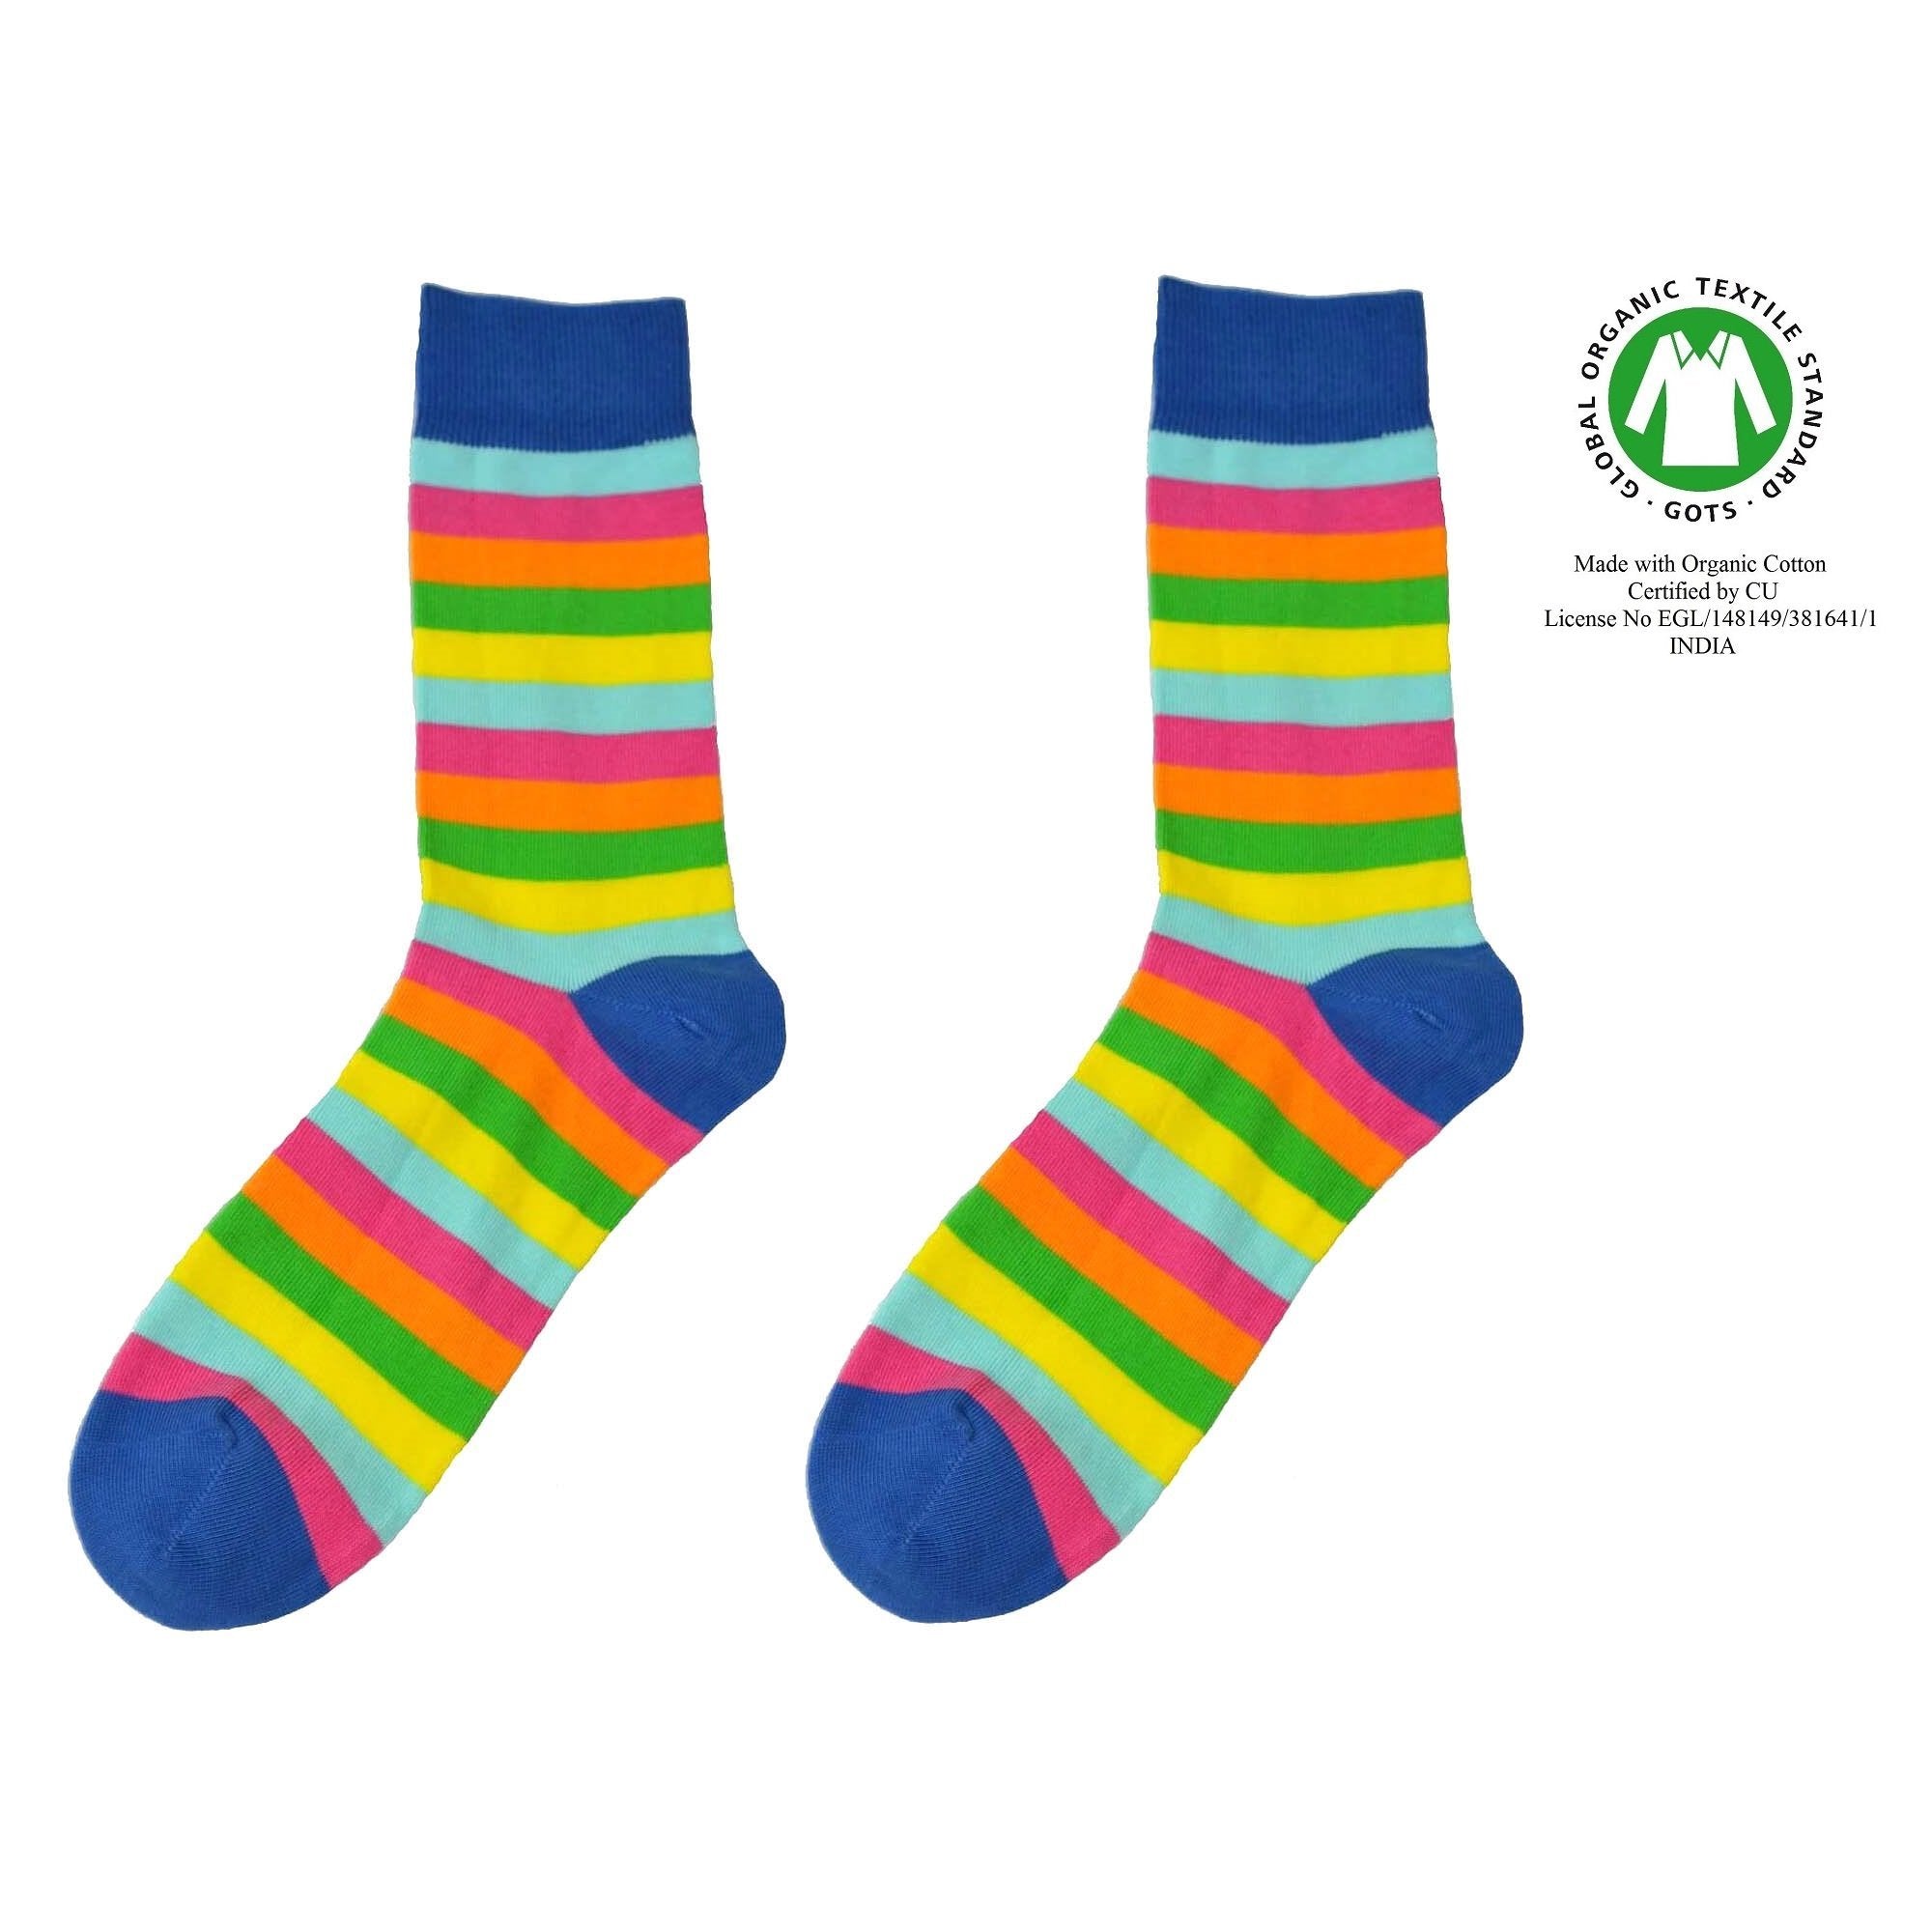 Lund sok - Organic socks of Sweden